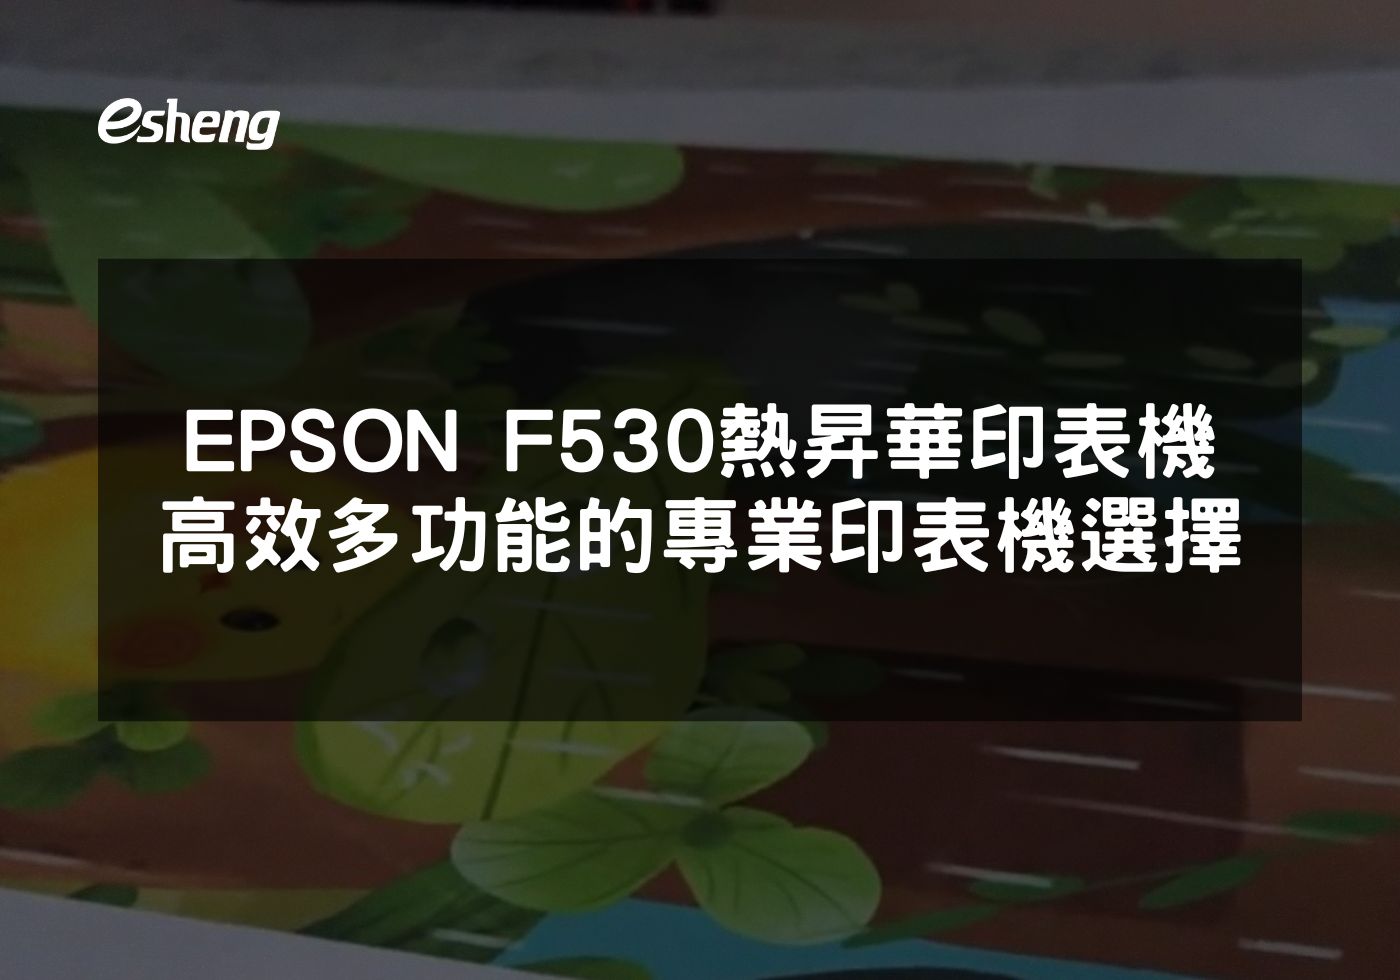 EPSON F530熱昇華印表機 高效多功能的專業印表機選擇